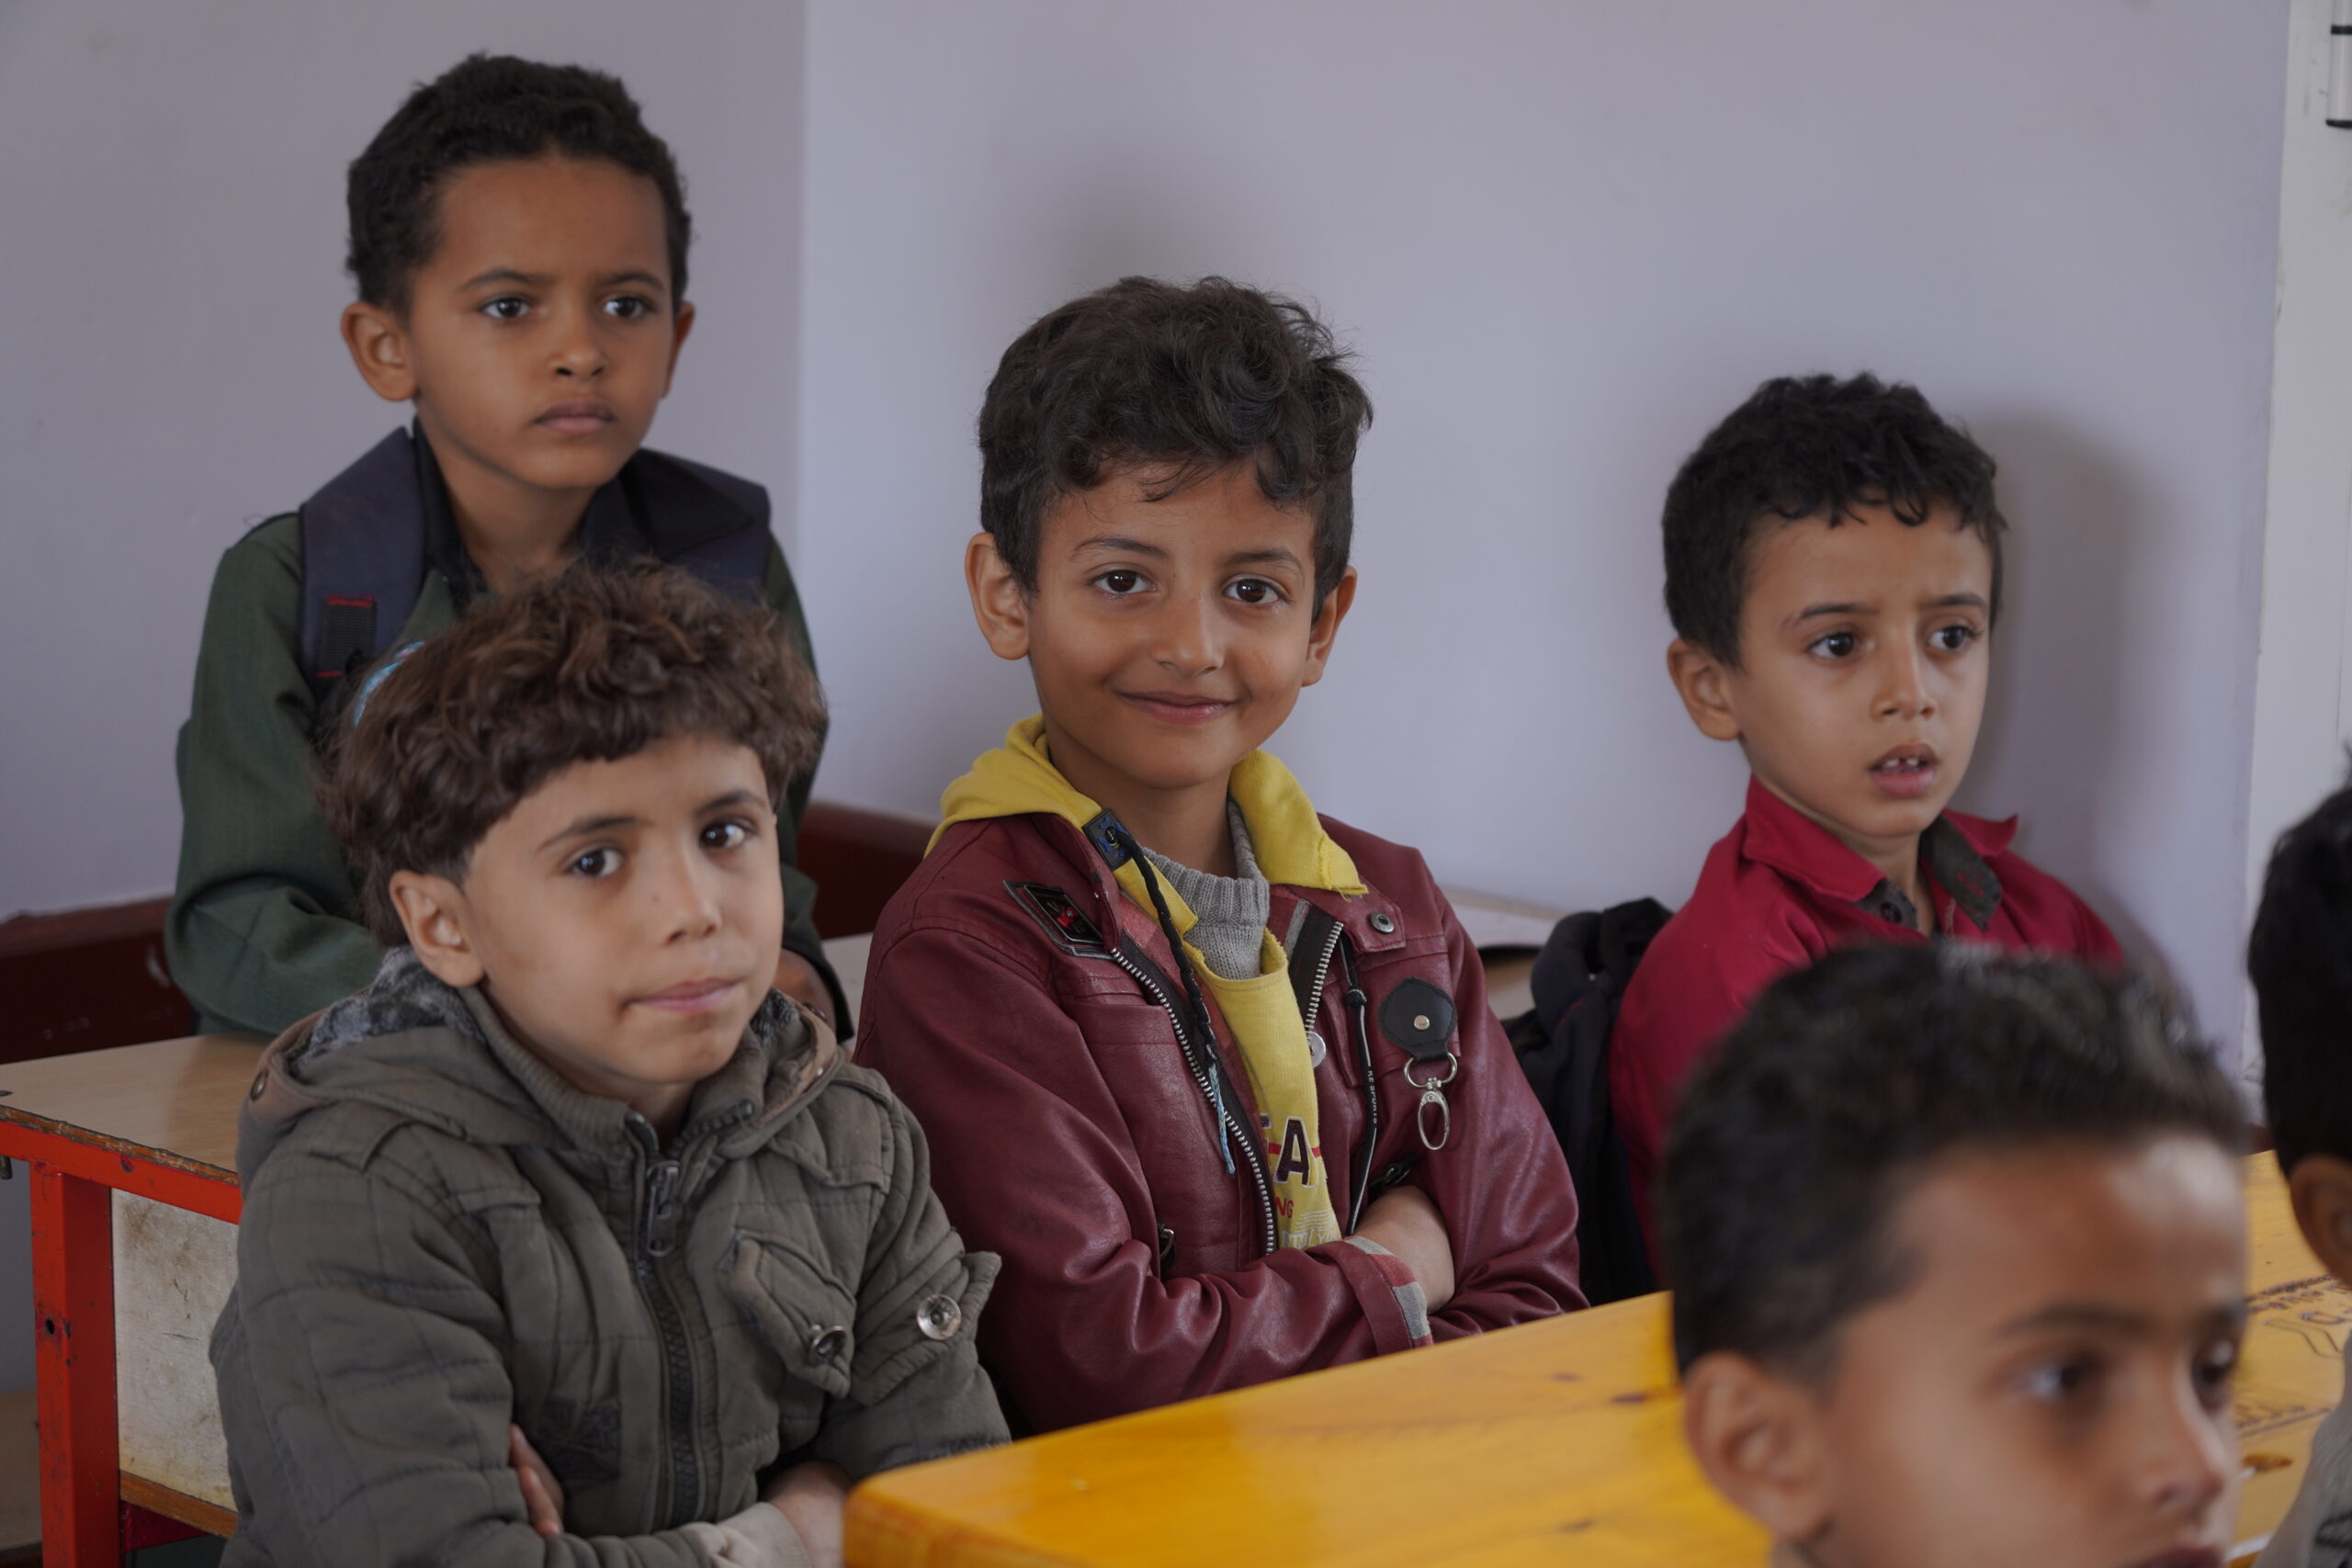 Boys at their desk smiling at school in Yemen